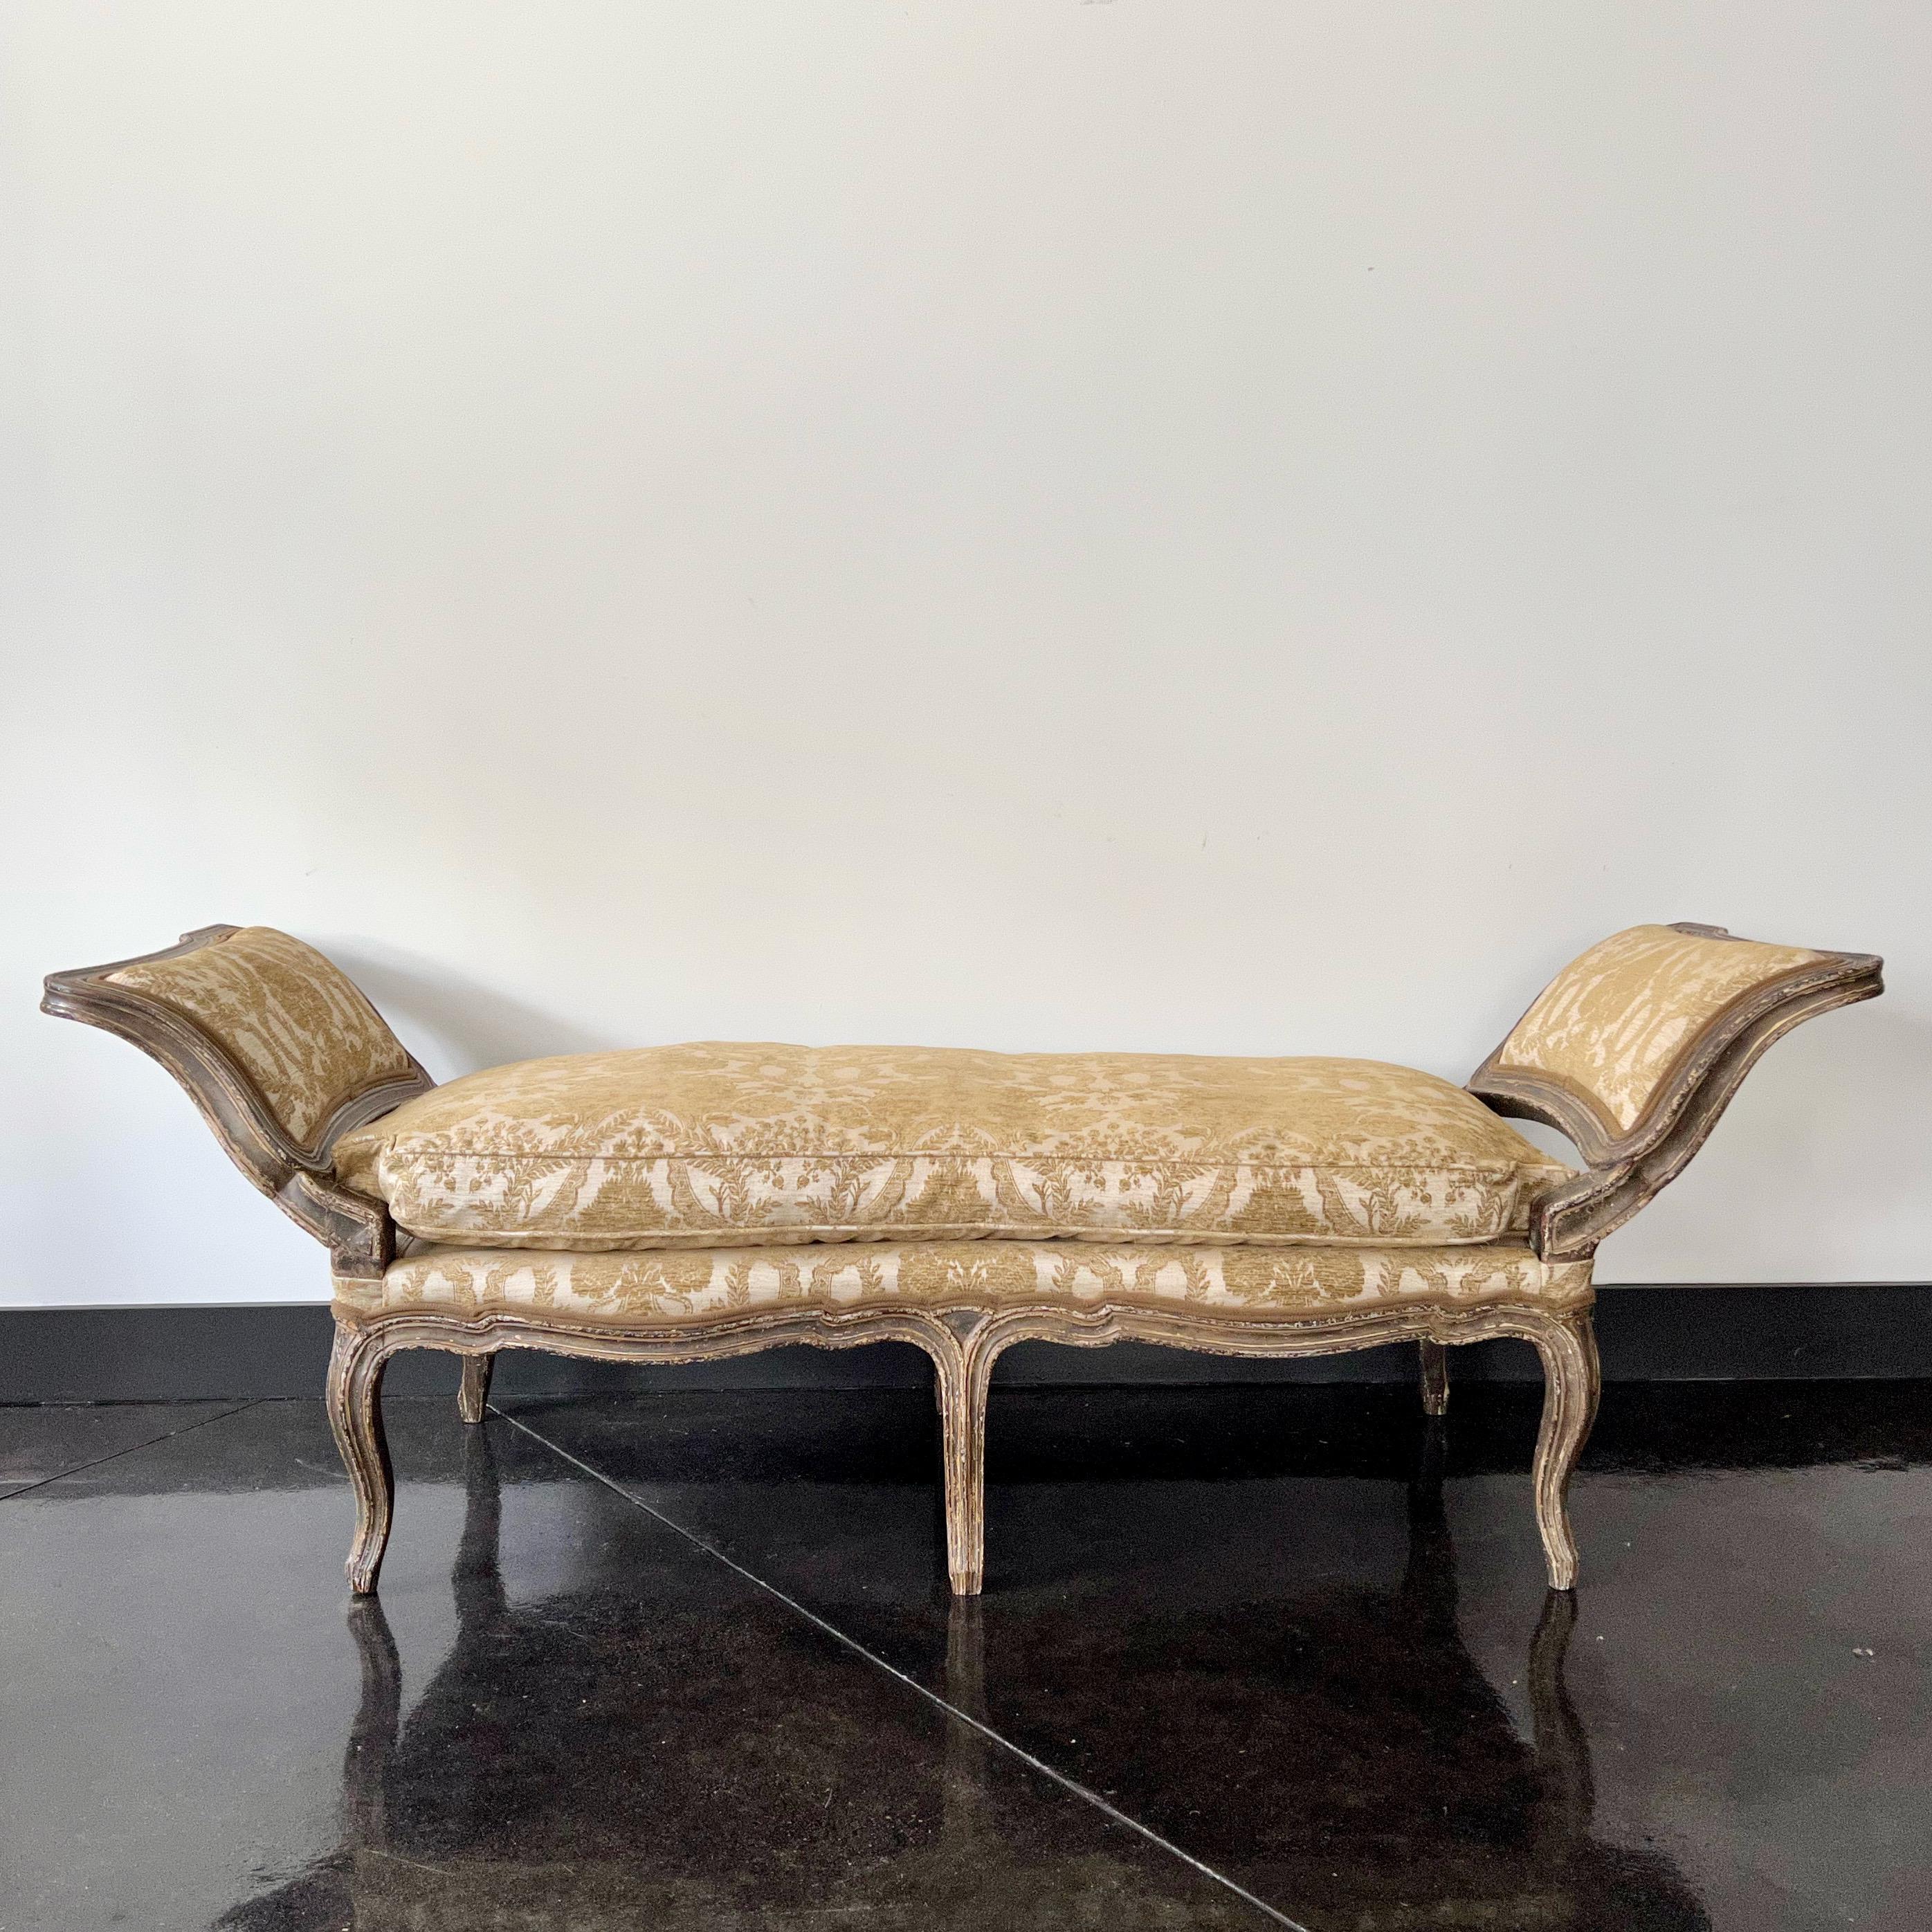 Elegant 18th century Italian settee in original patina re-upholstered in beautiful golden velvet fabric.
Venice, Italy ca 1775/80.